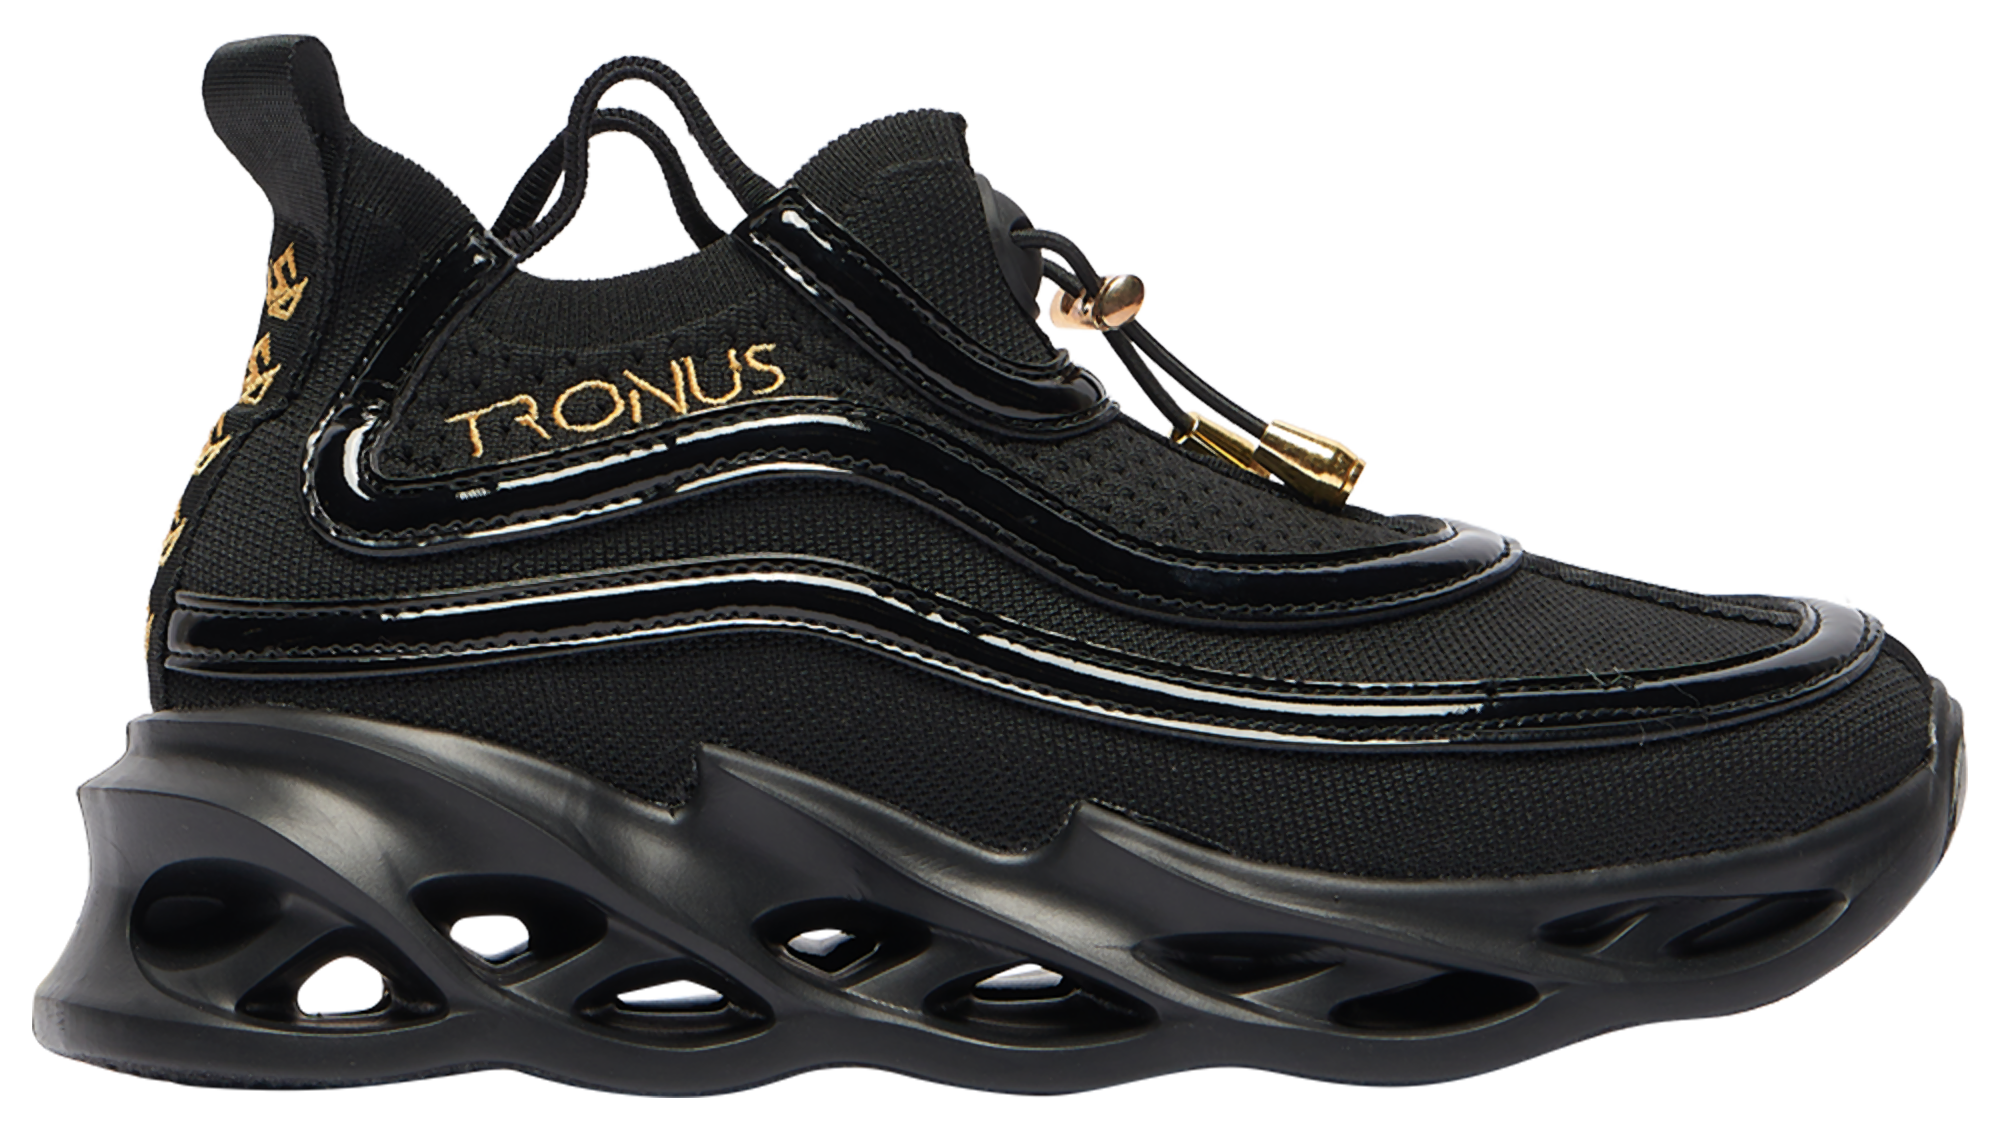 Tronus Low Top Sneakers